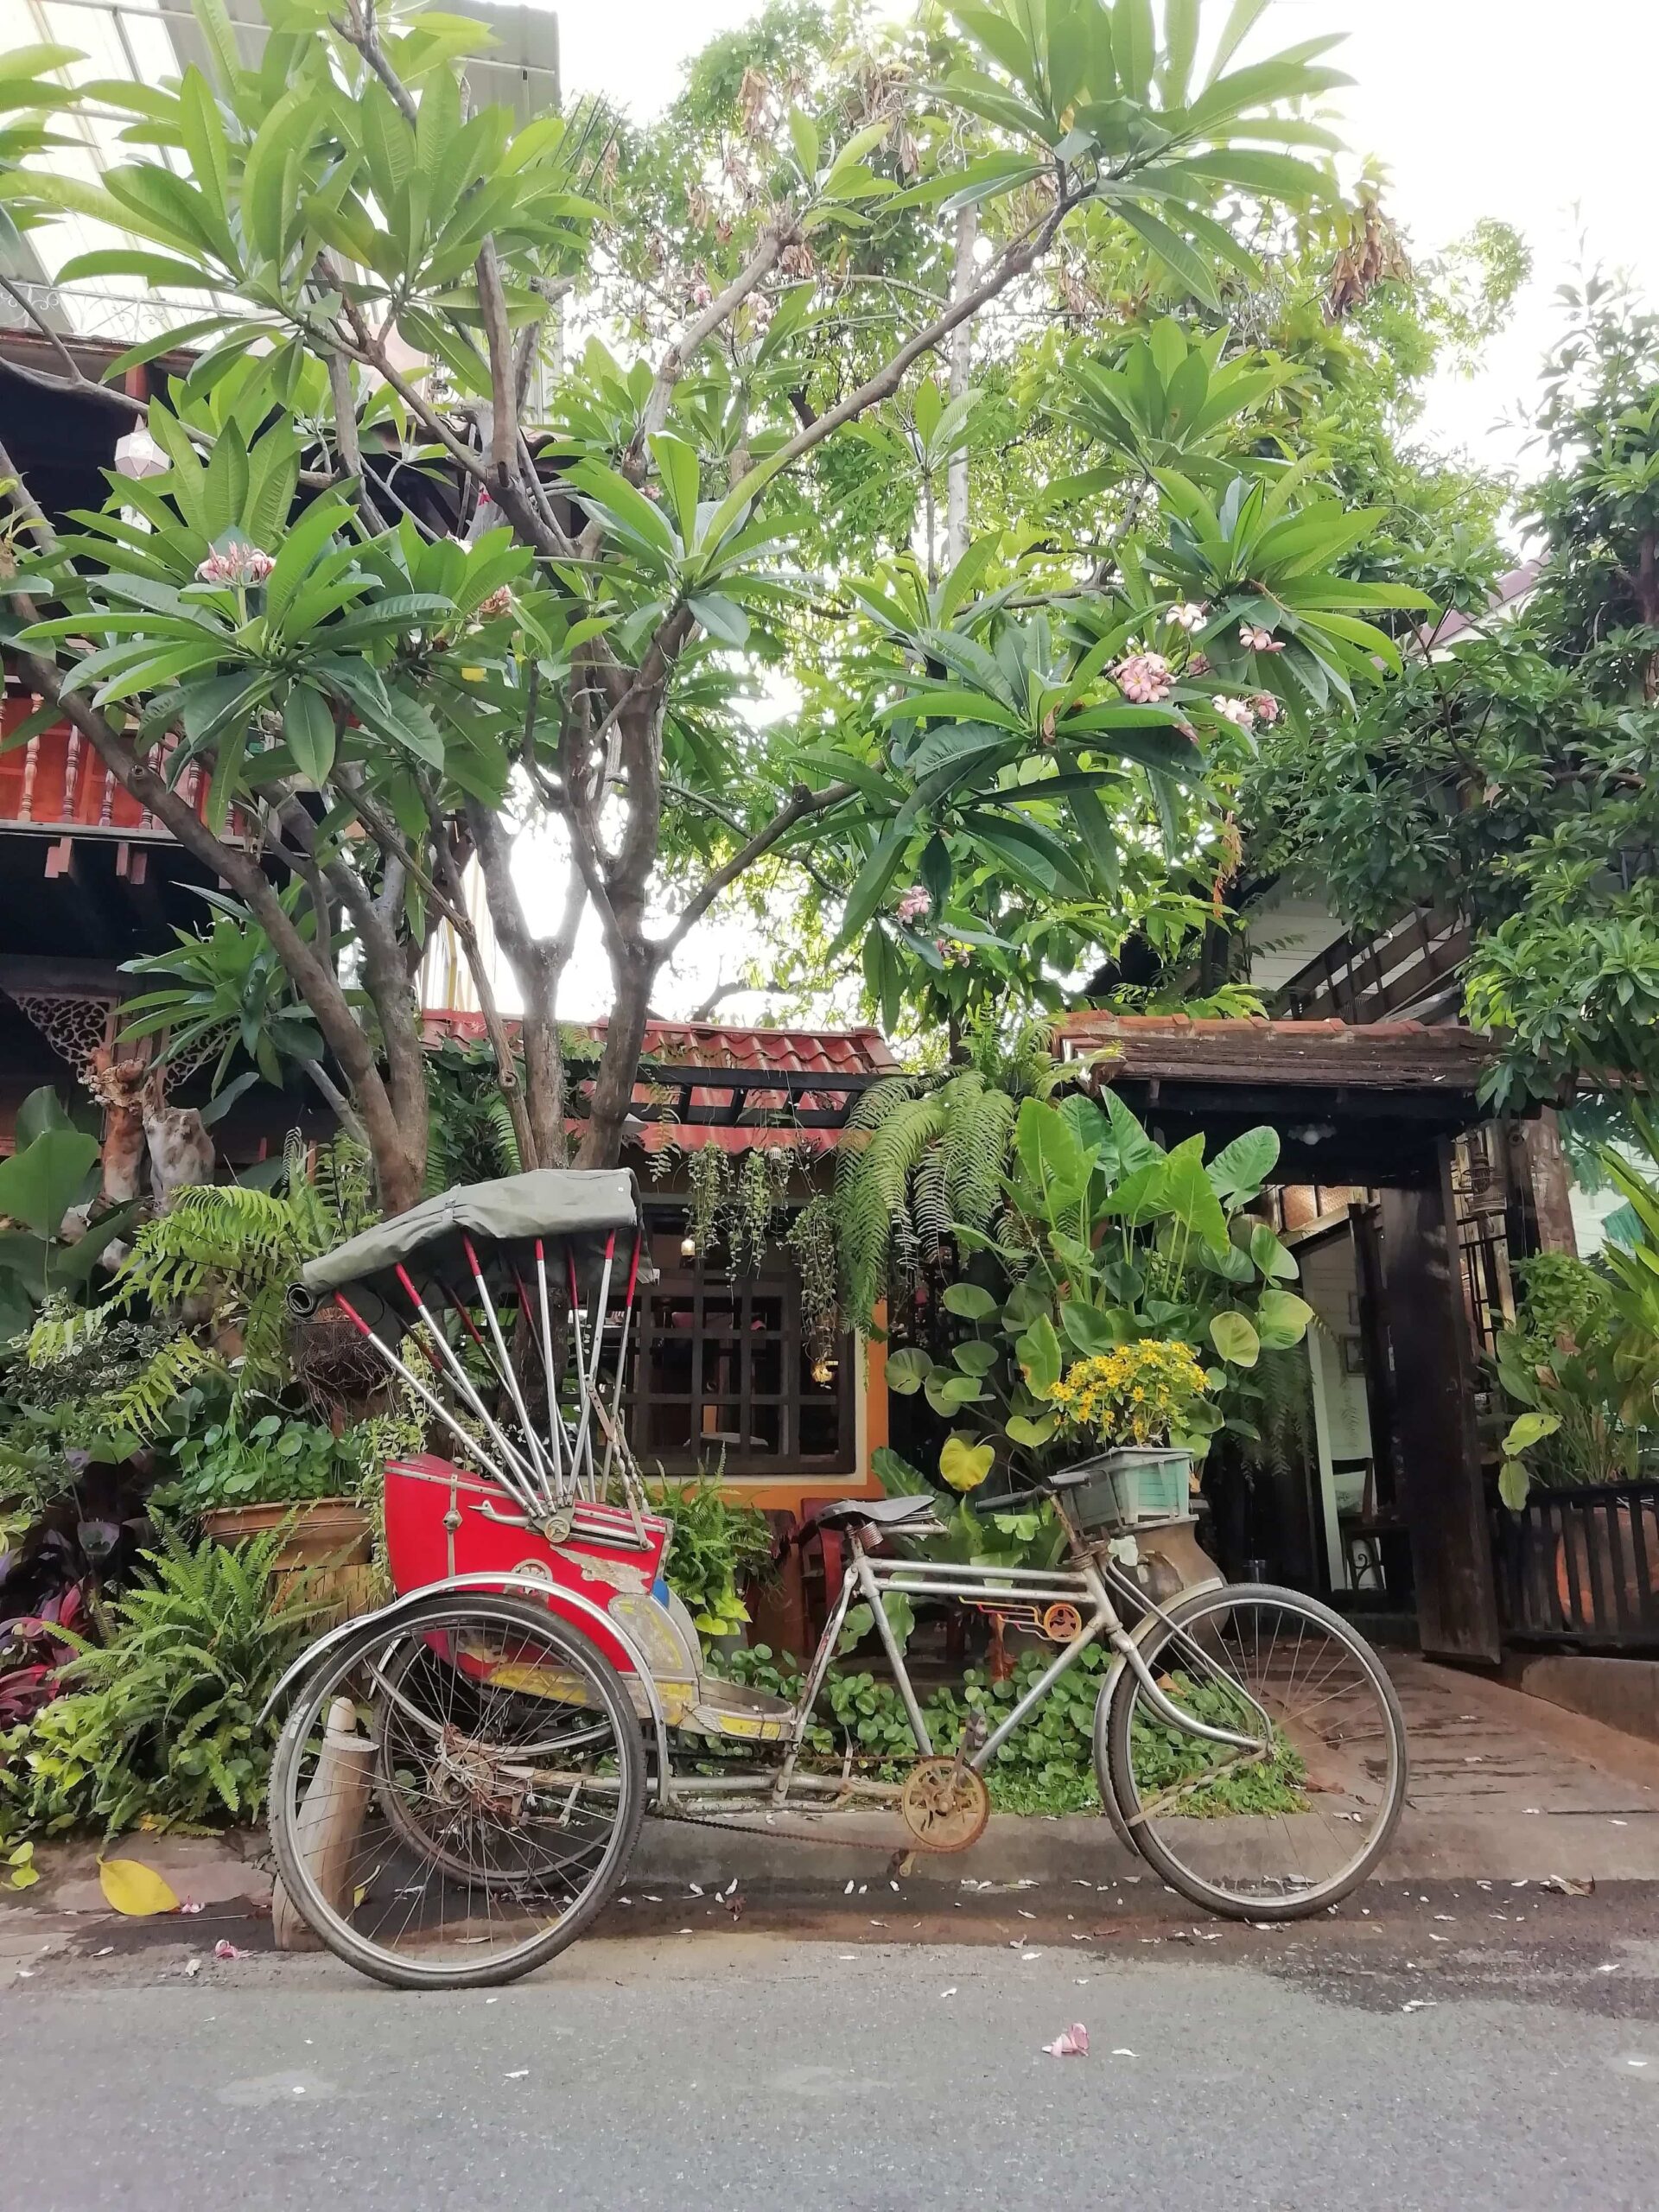 Bike on a leafy street in Chiang Mai